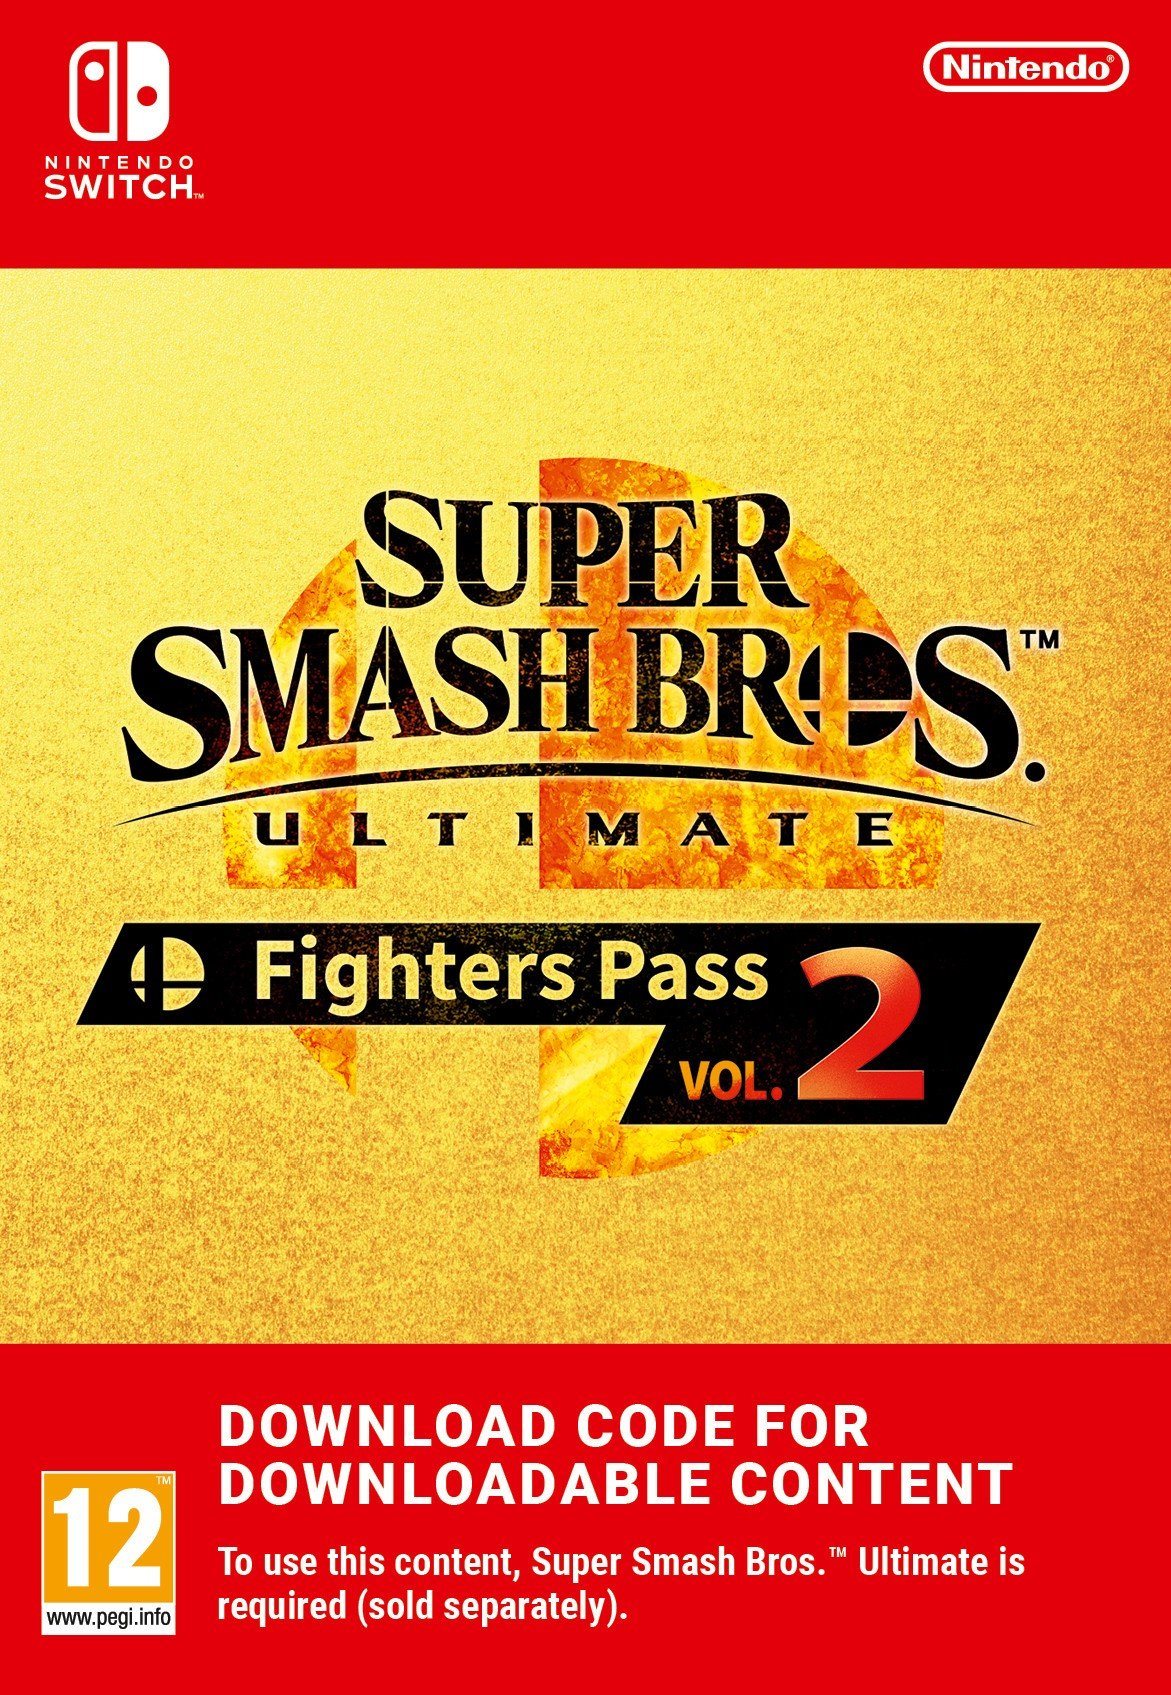 Super Smash Bros. Ultimate Fighters Pass vol. 2 - Nintendo Switch Digital